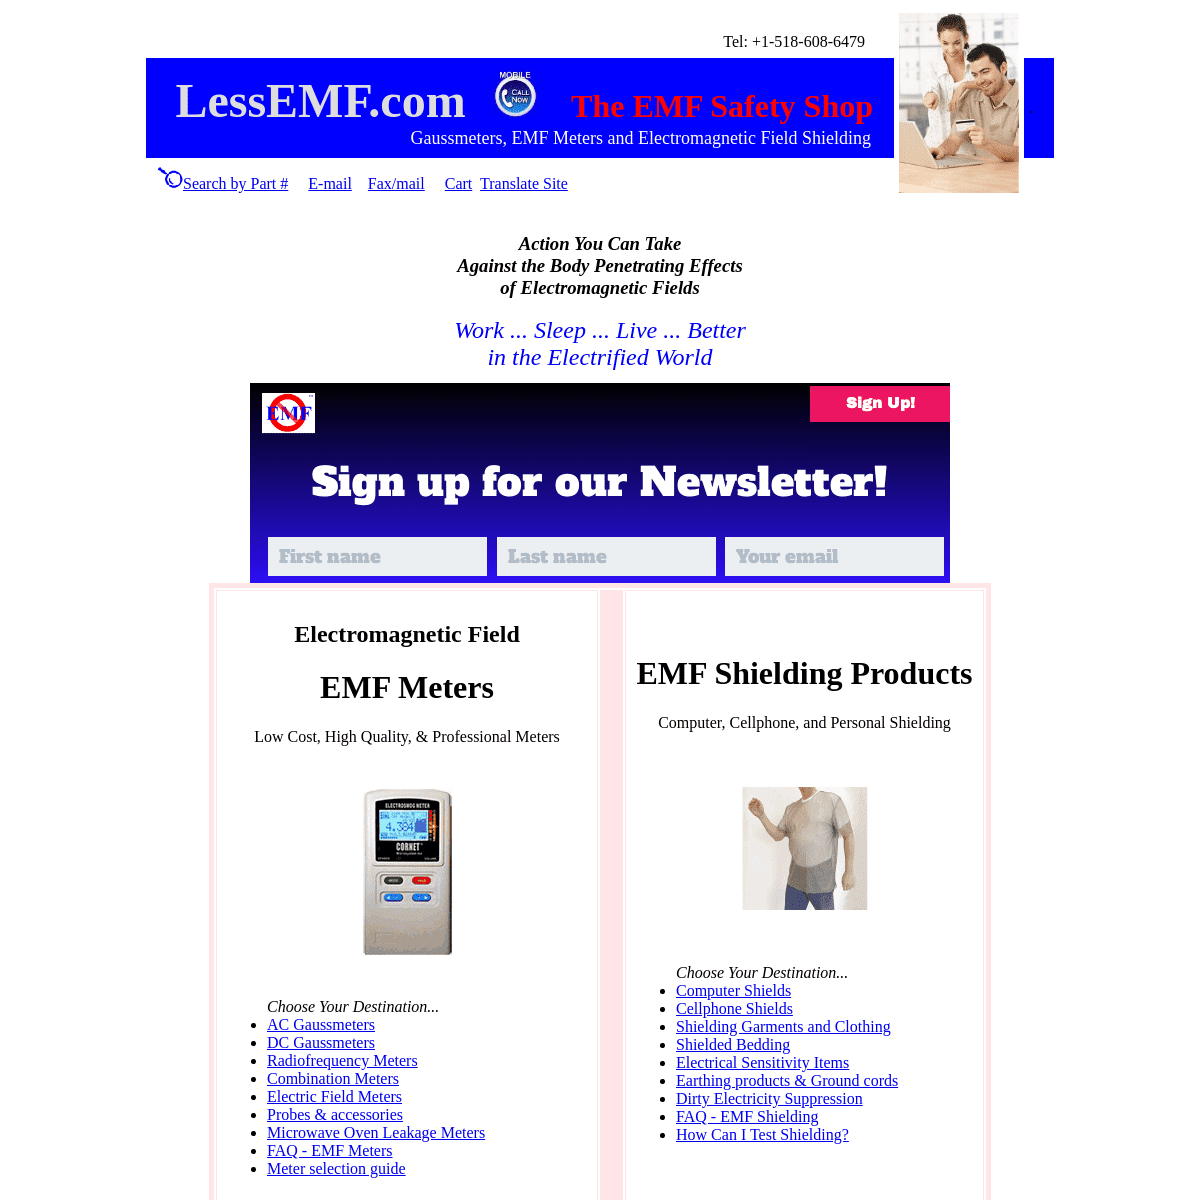 A complete backup of lessemf.com